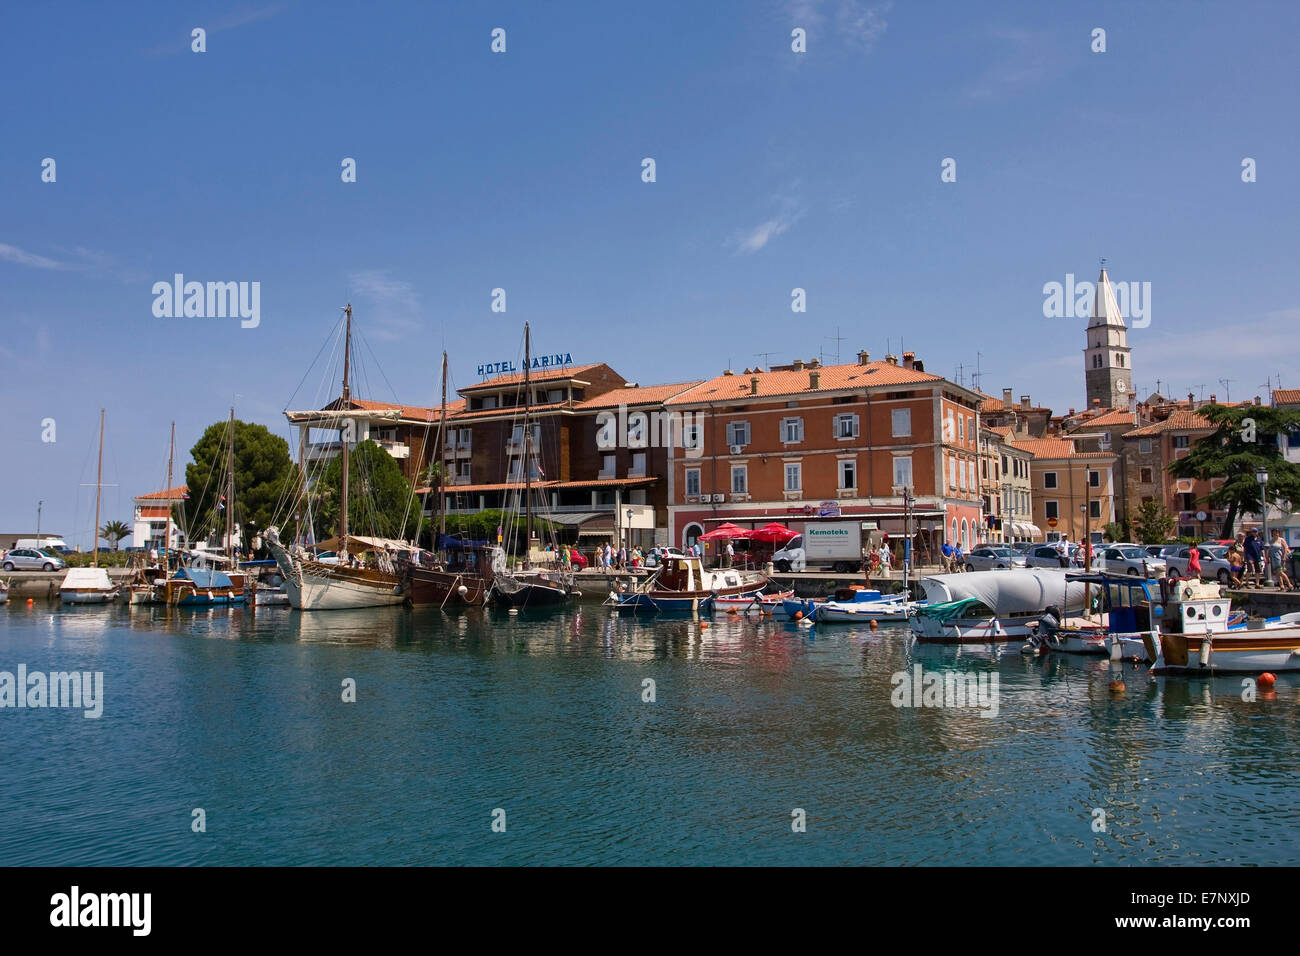 Adriatic, adriatic, Old Towns, Old Town, anchors, Balkans, boats, Europe, Izola, Marina, Portoroz, Istria, ships, sail boats, sa Stock Photo